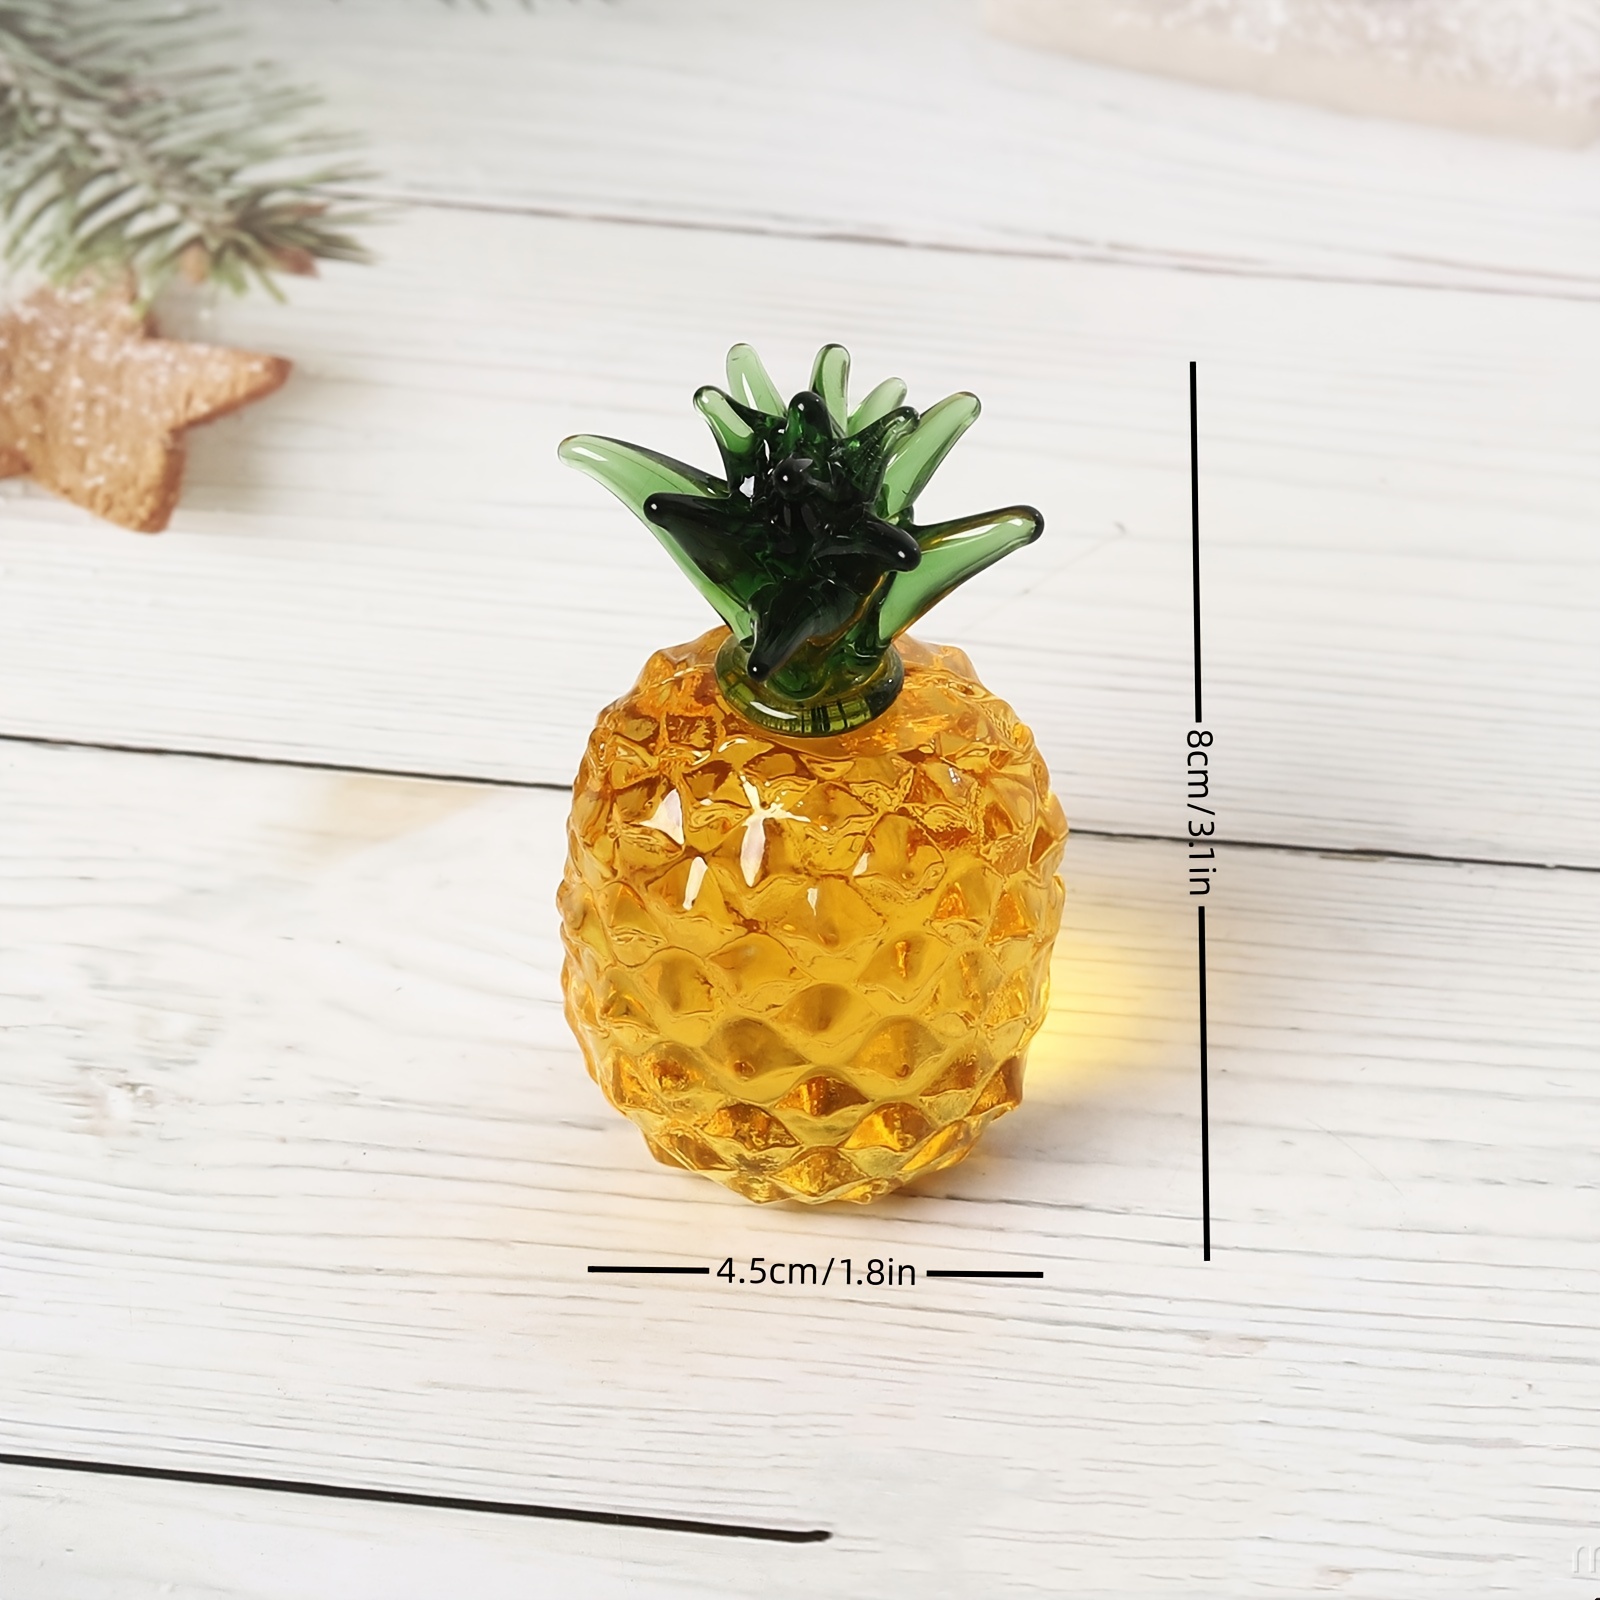 Crystal Fruit Pineapple Ornament Home Desk Tabletop Showpiece for